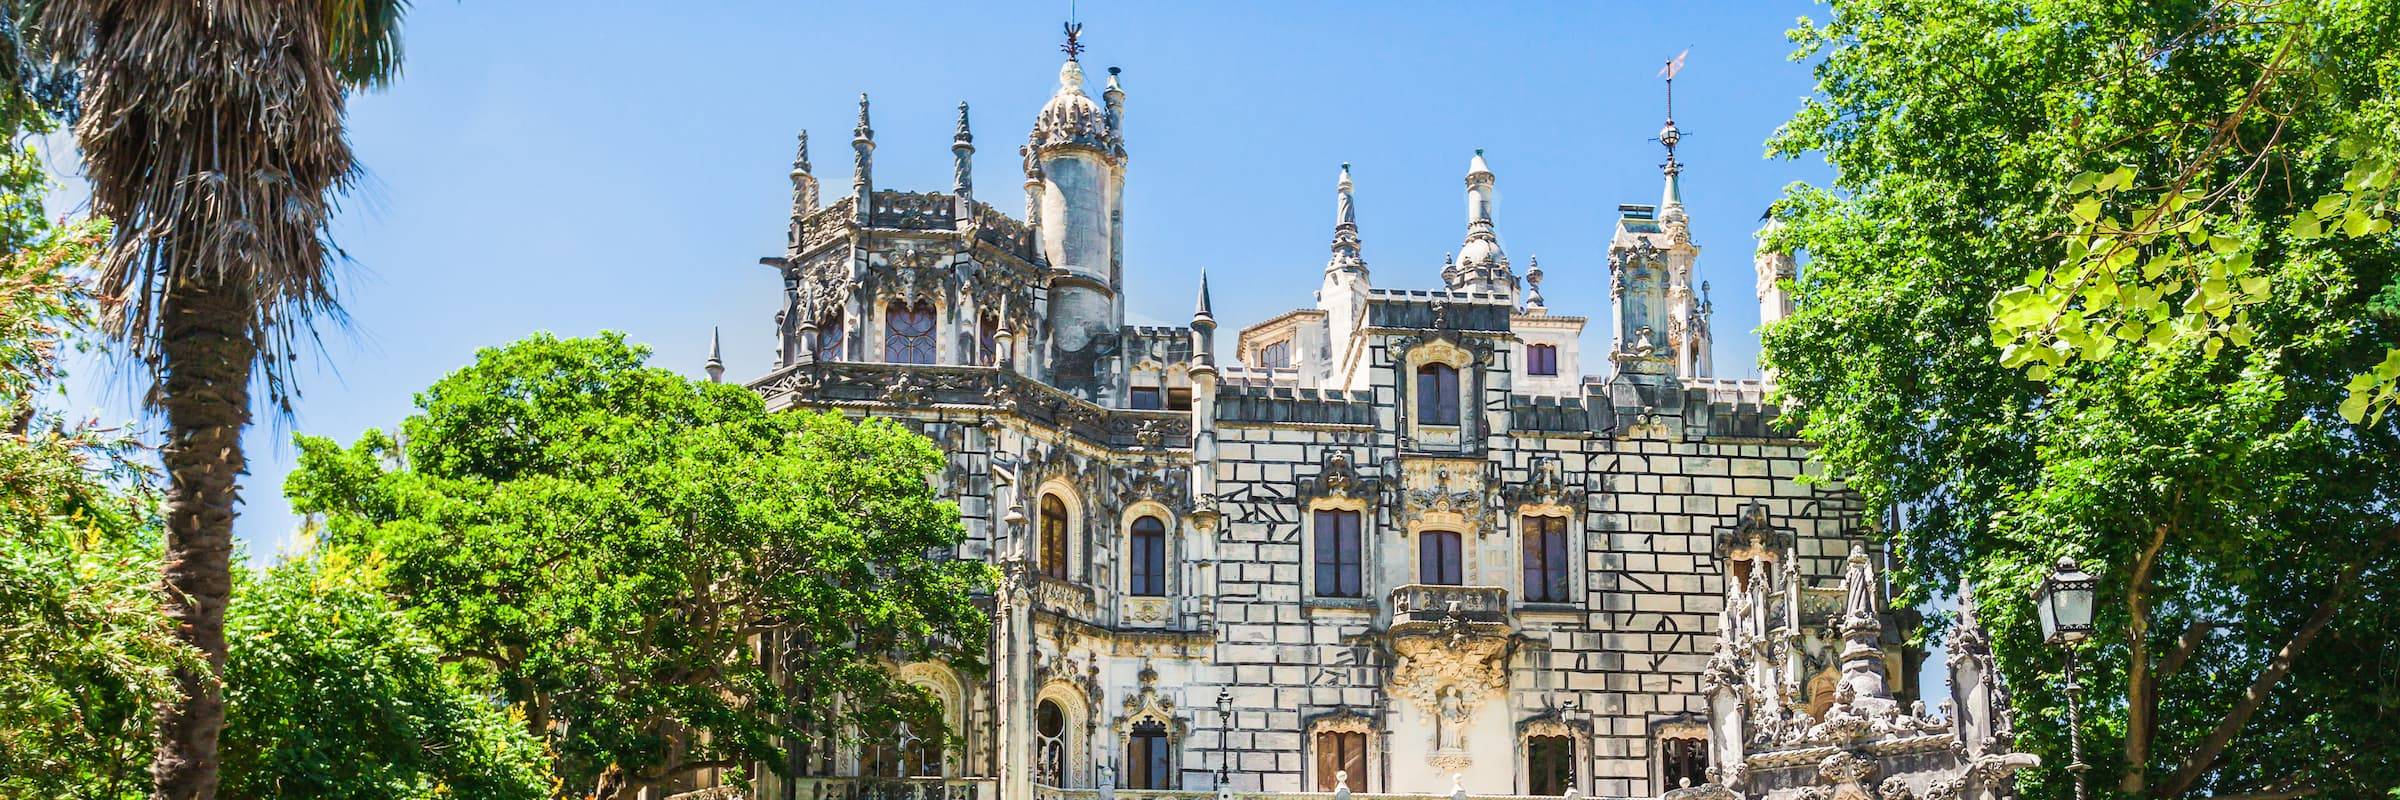 Visita guiada de Sintra con entrada a la Quinta da Regaleira